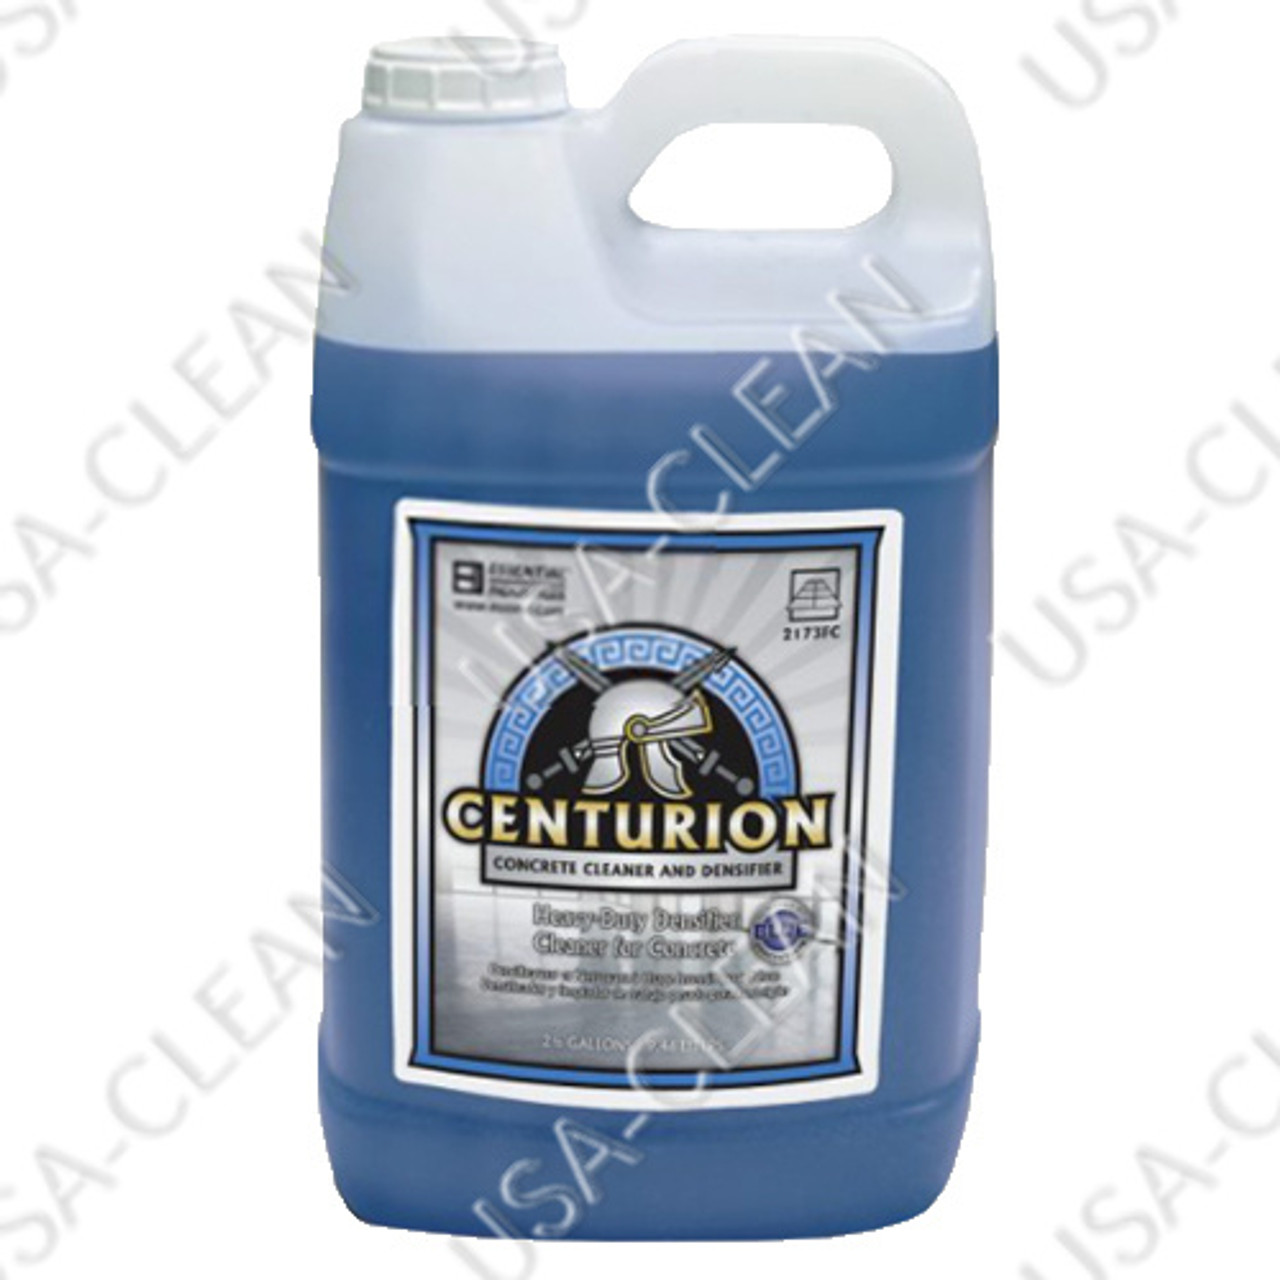 Centurion concrete cleaner and densifier (2 1/2 gallon) 250-2056